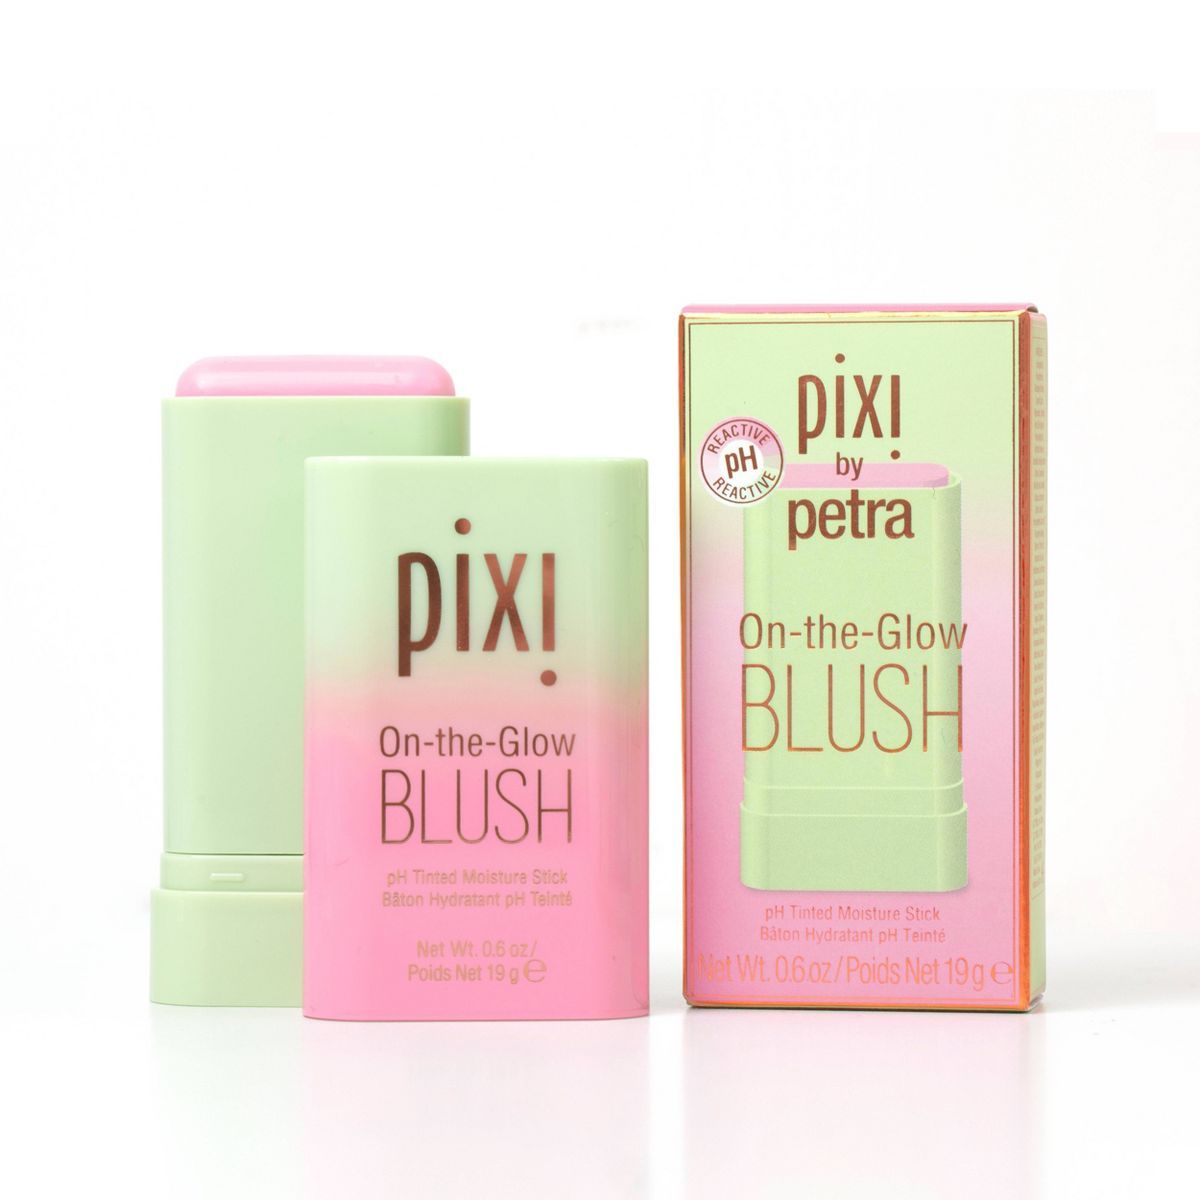 Pixi by Petra On-the-Glow Blush - 0.67oz | Target